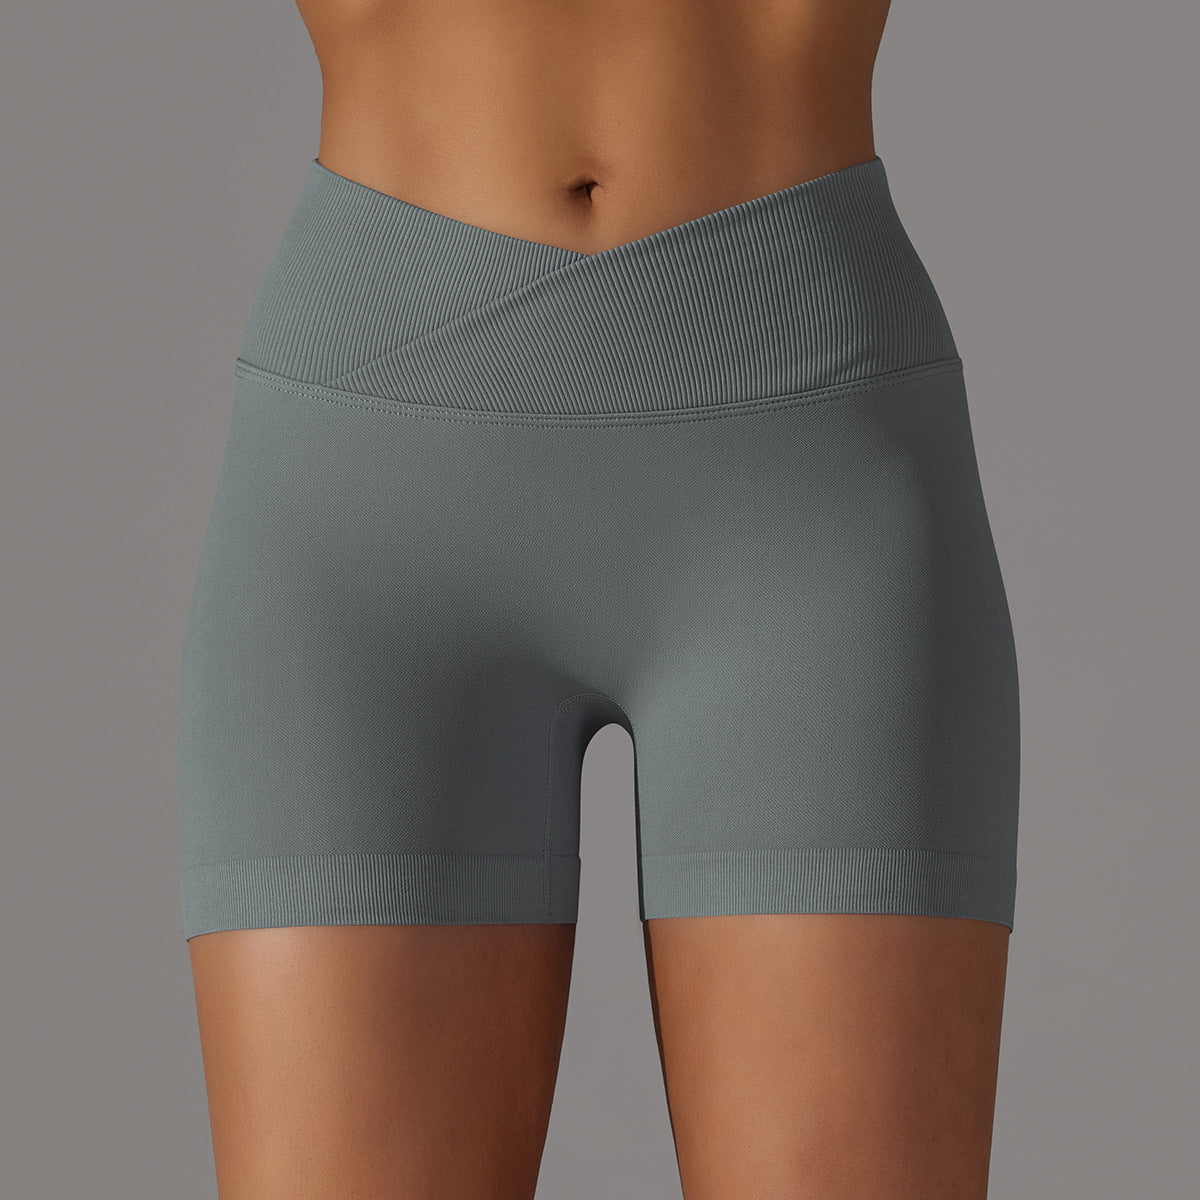 Solid color cross waist peach butt yoga shorts three-quarter pants 15colors